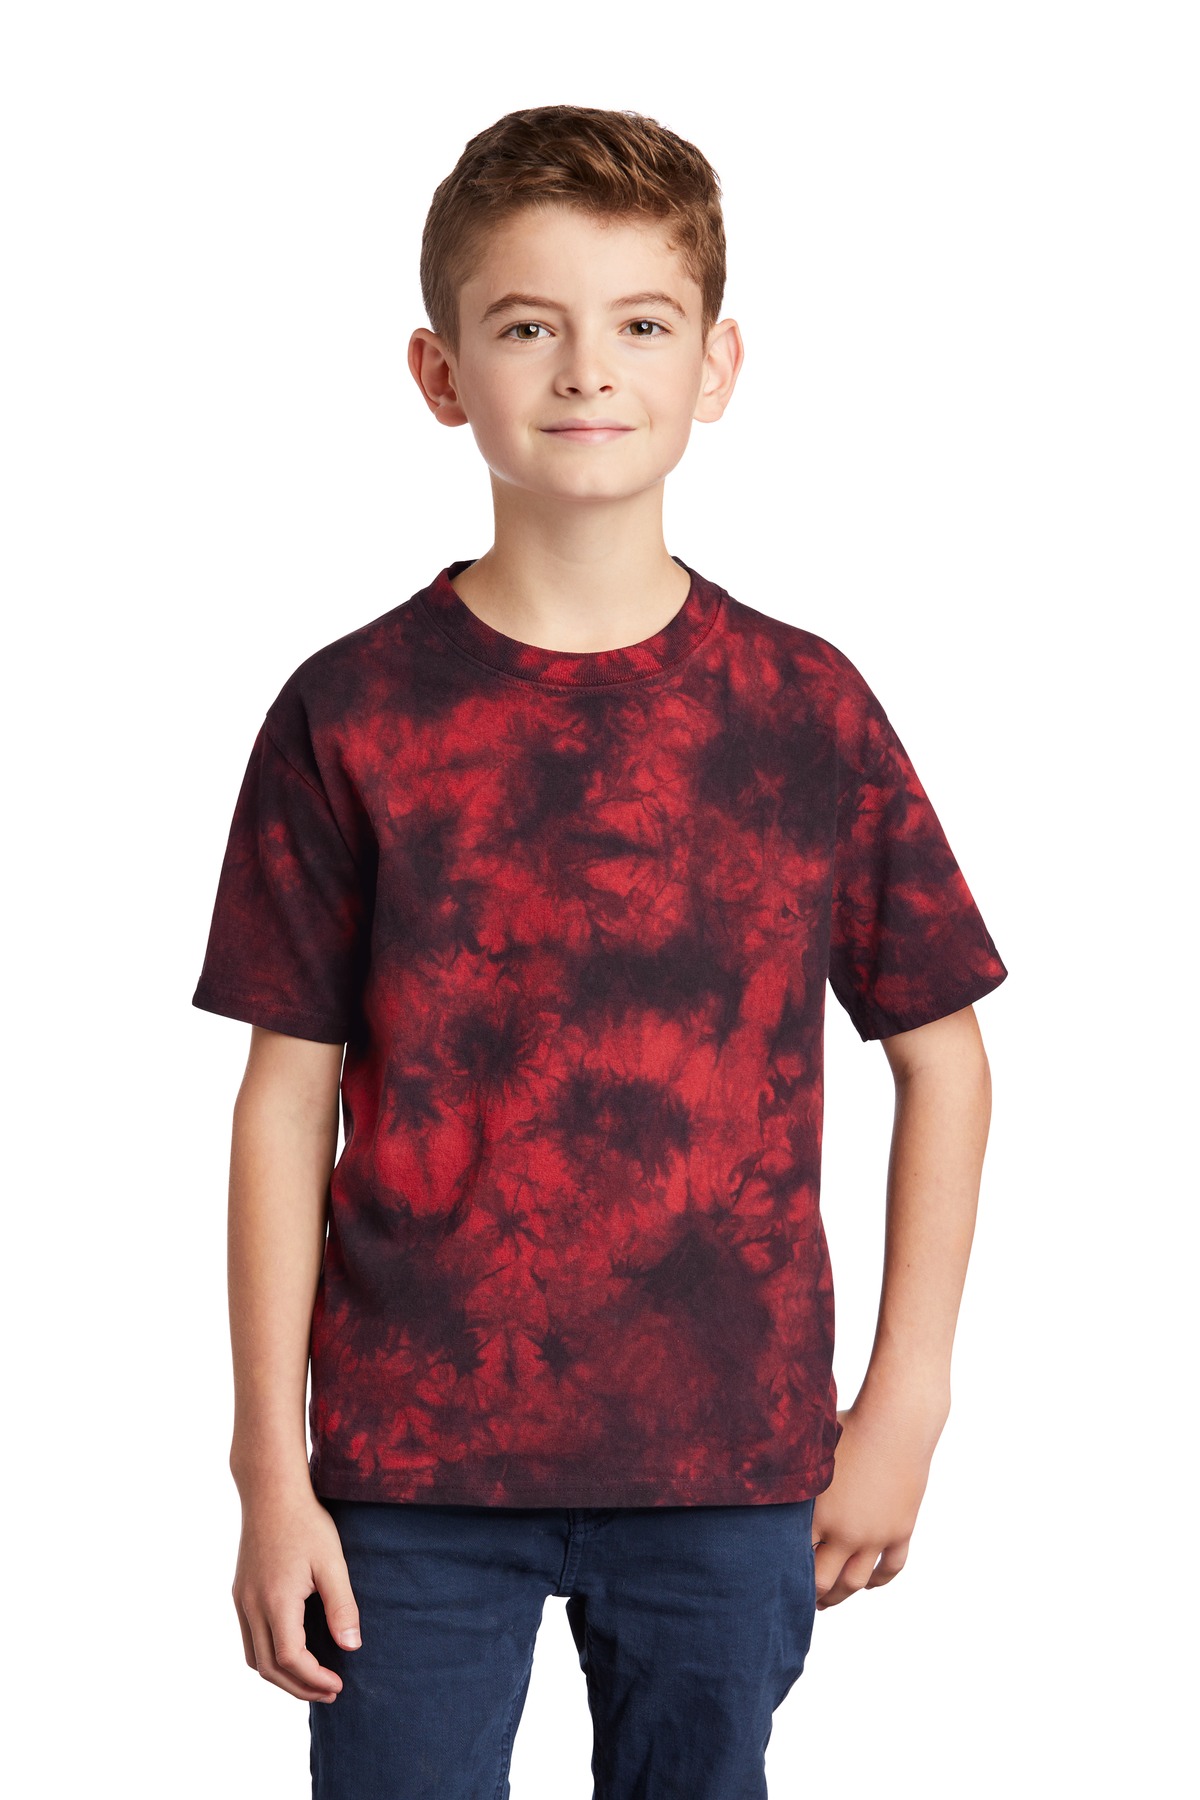 Port & Company Youth Crystal Tie-Dye T-Shirt PC145Y